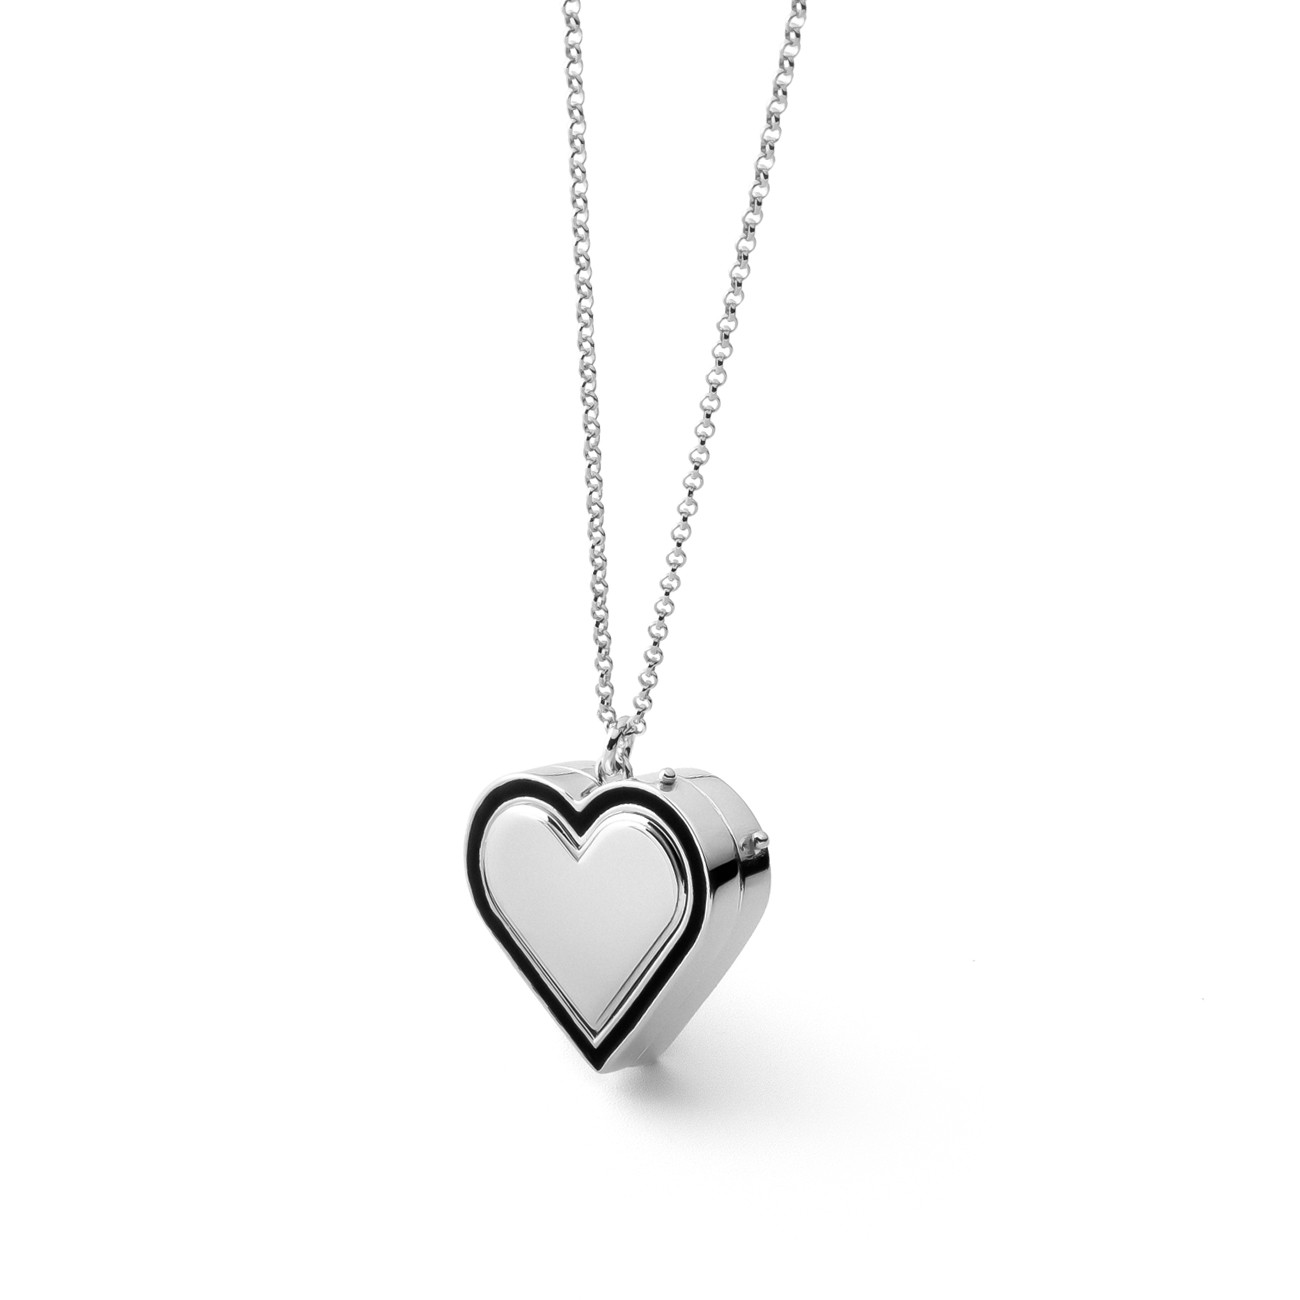 Silver heart locket pendant necklace, sterling silver 925